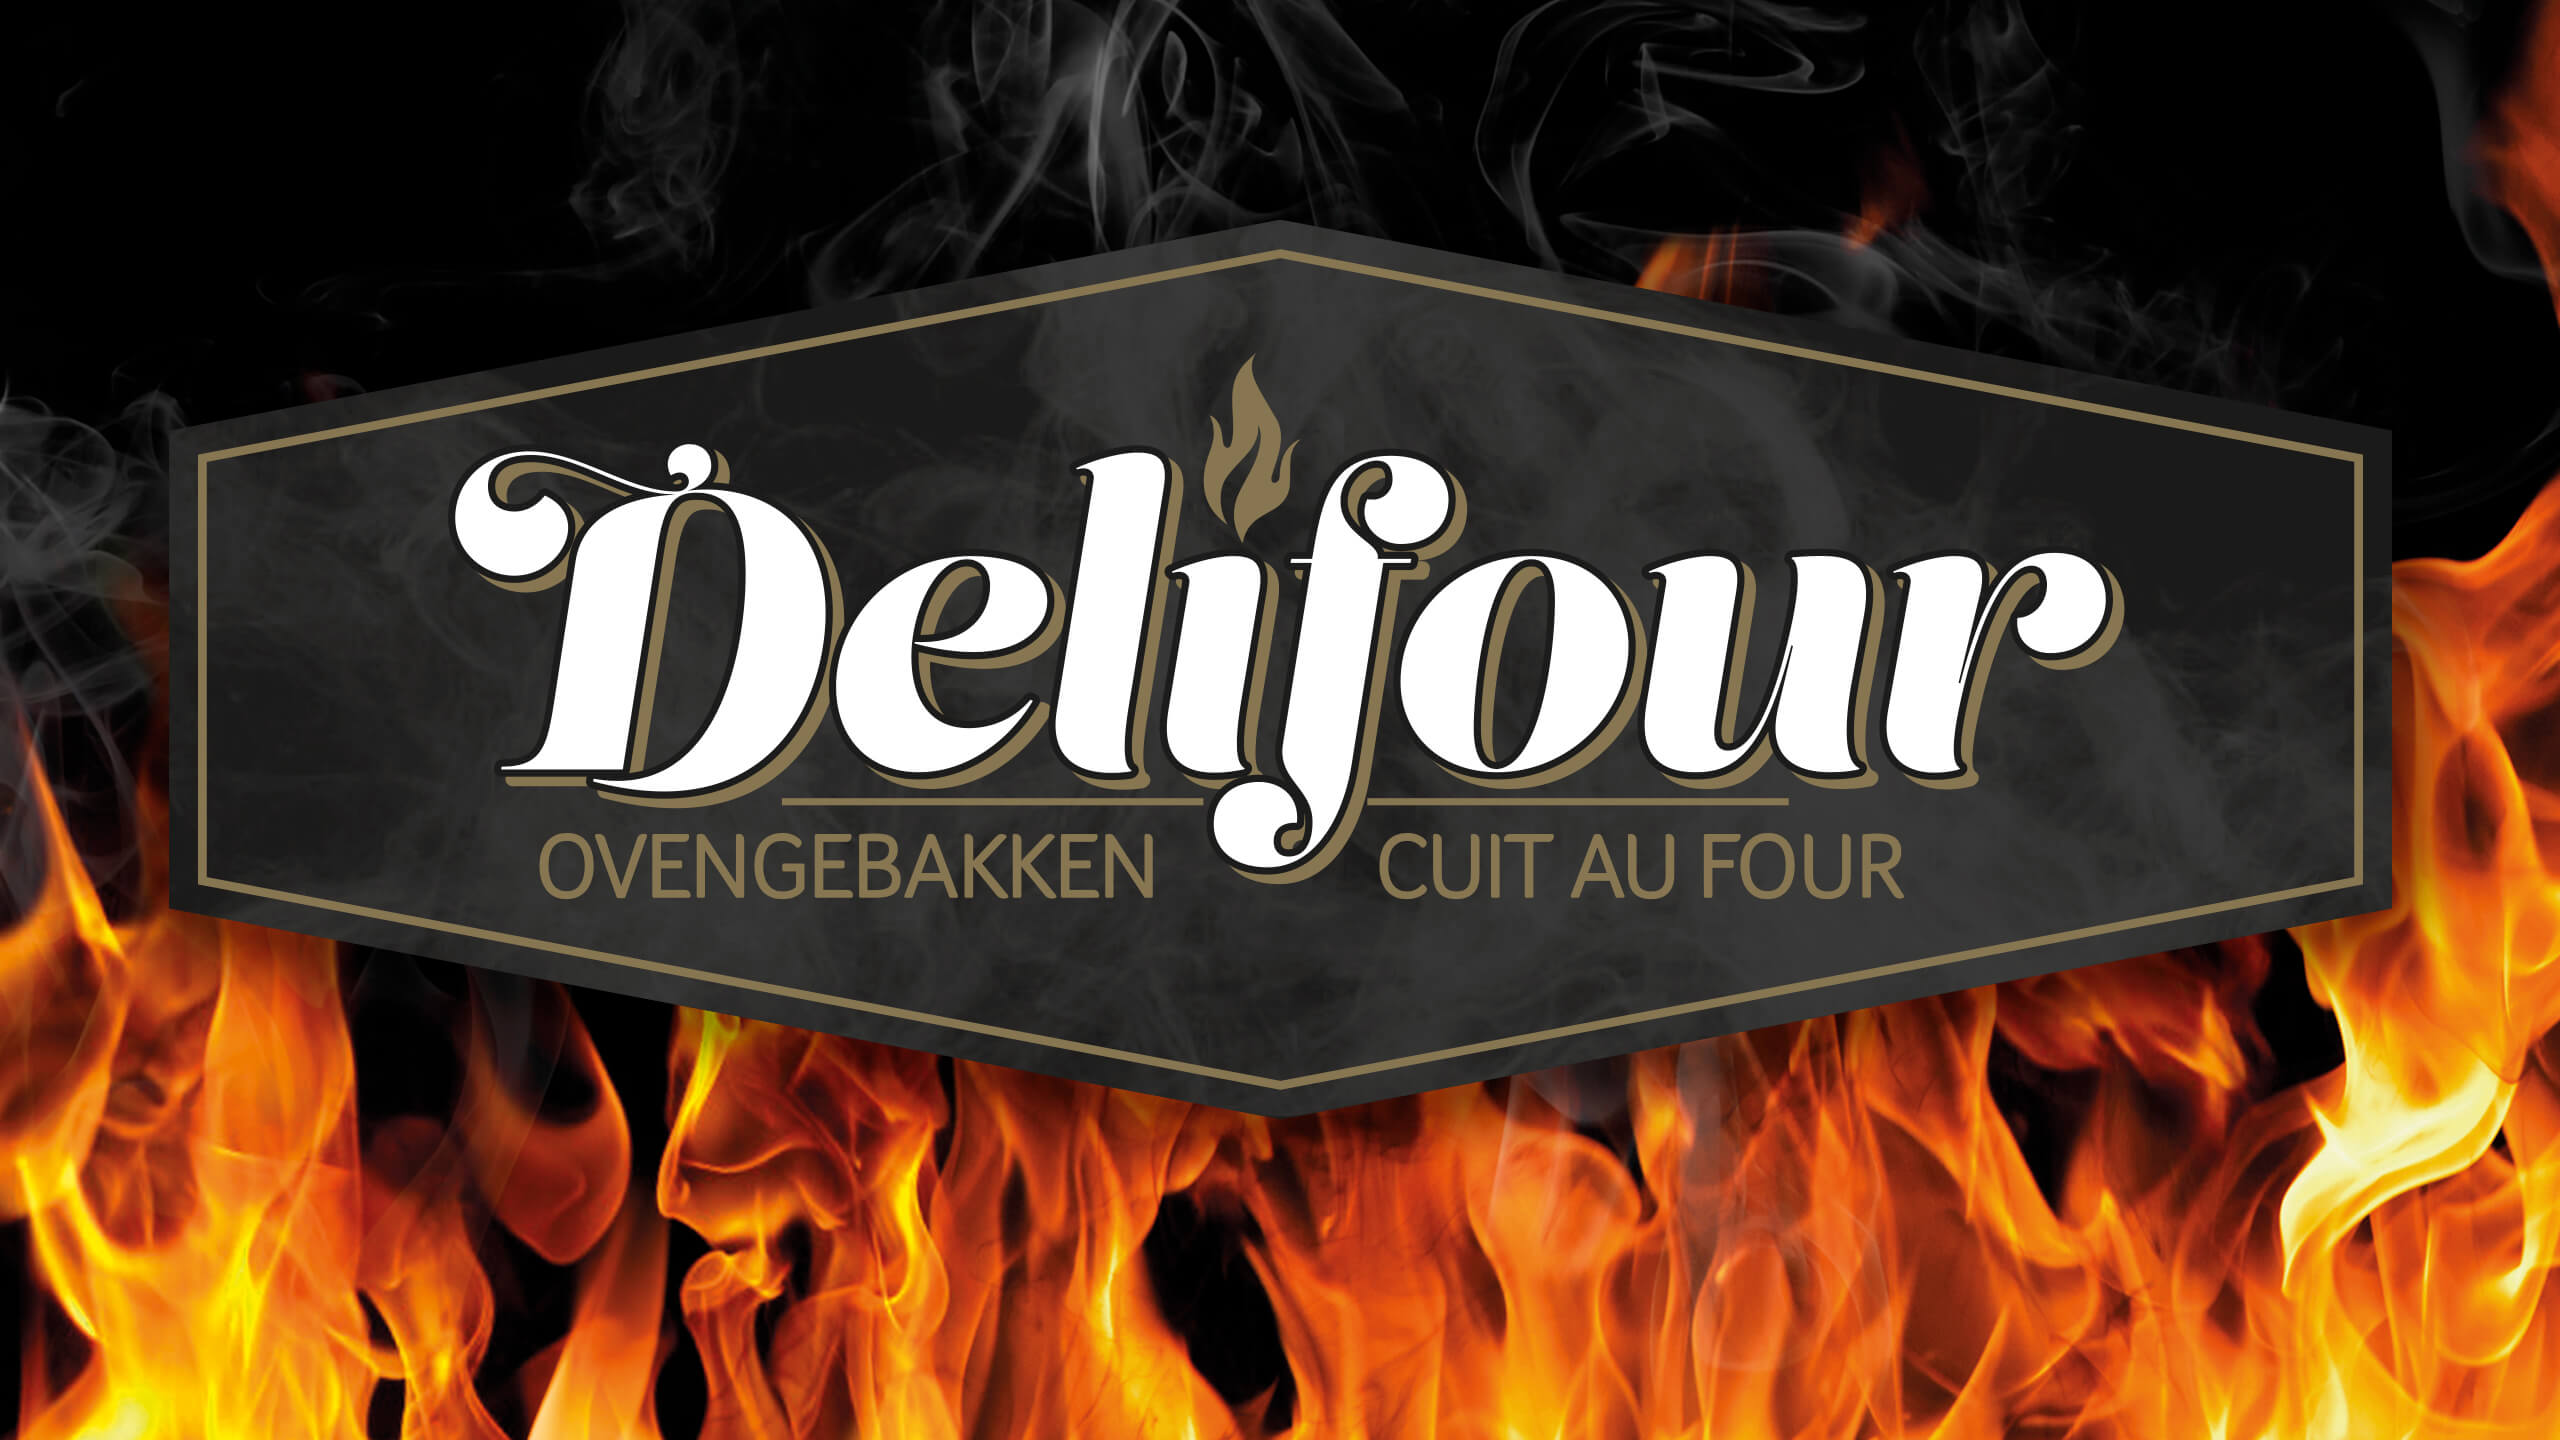 food logo merknaam delifour